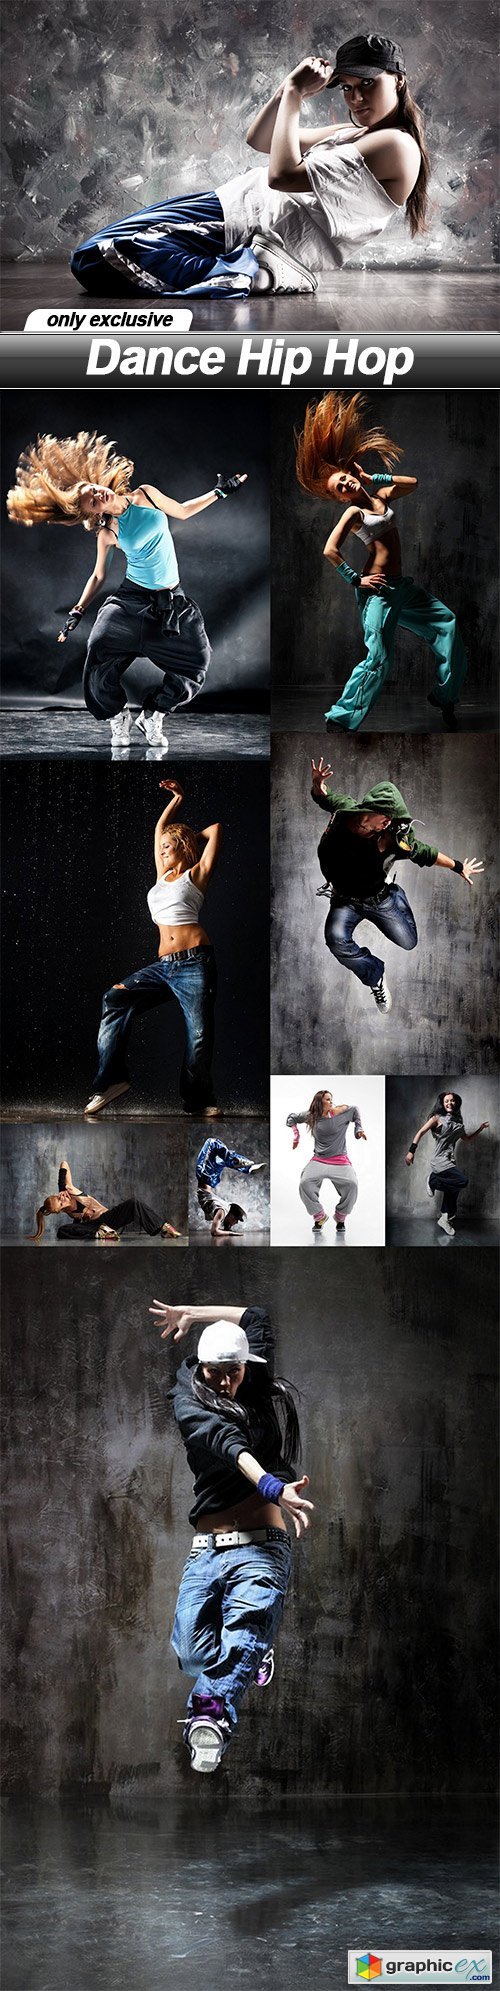 Dance Hip Hop - 10 UHQ JPEG